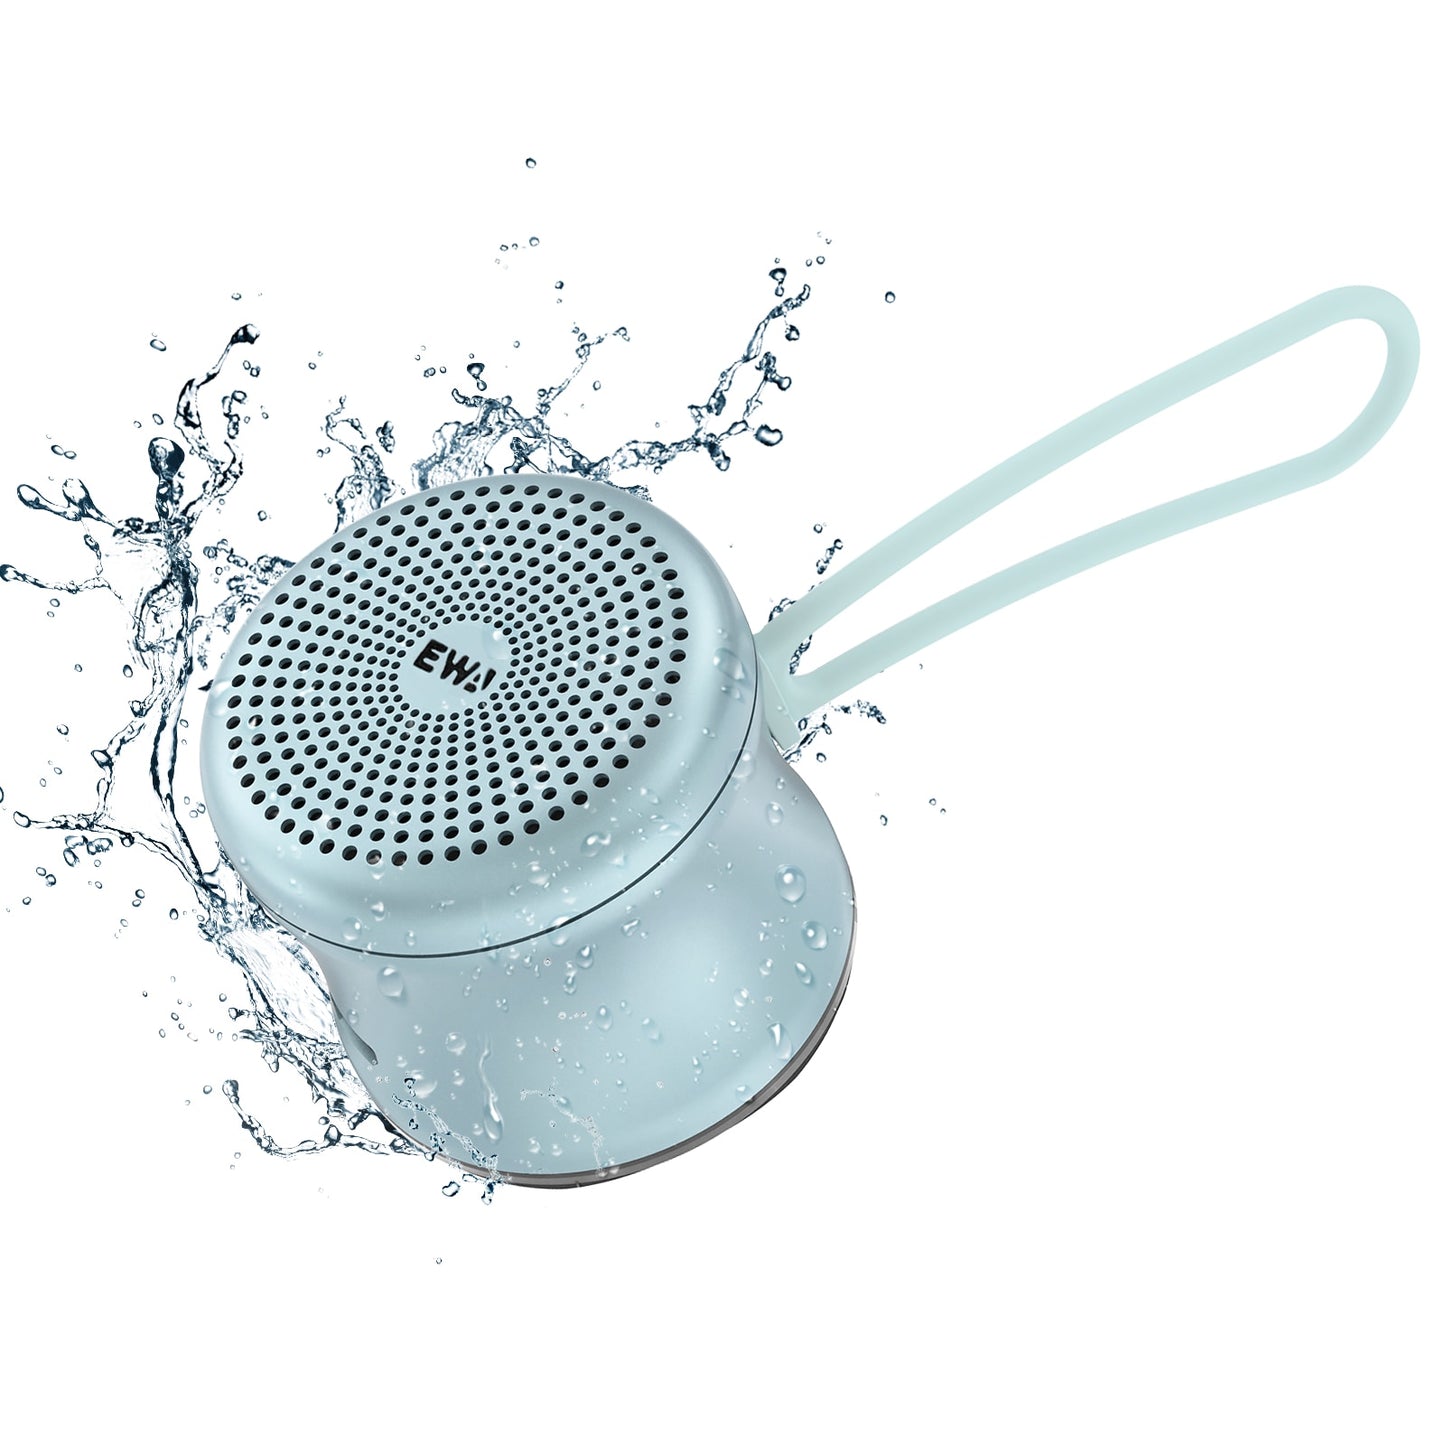 EWA A106 Pro Mini Bluetooth Speaker